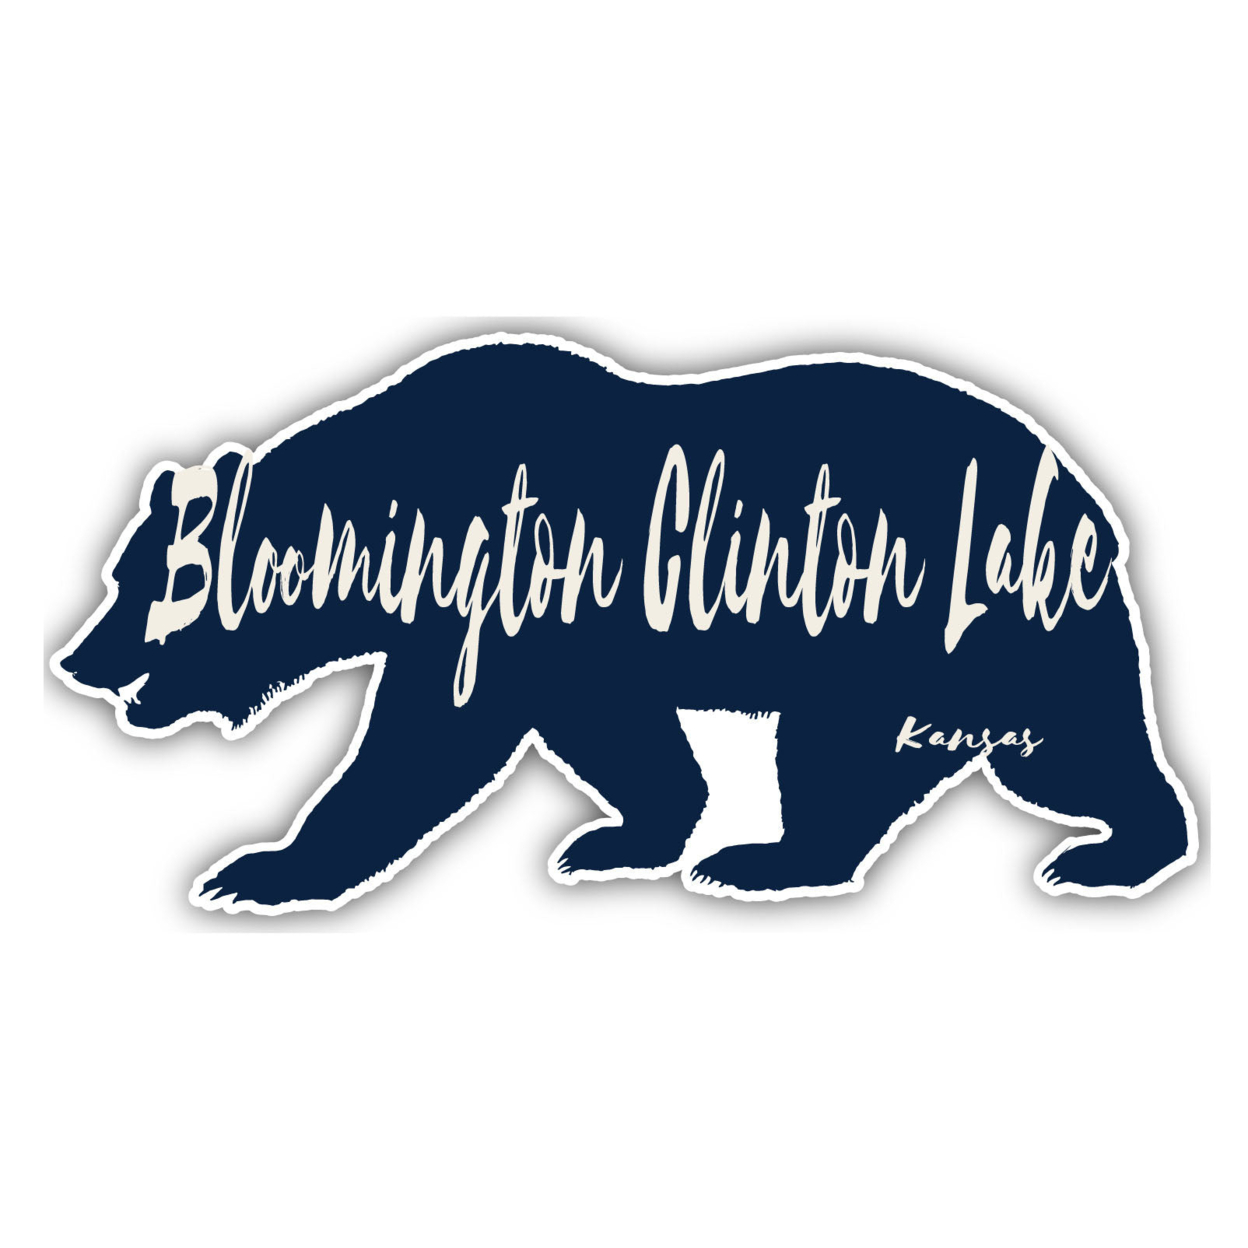 Bloomington Clinton Lake Kansas Souvenir Decorative Stickers (Choose Theme And Size) - Single Unit, 4-Inch, Bear